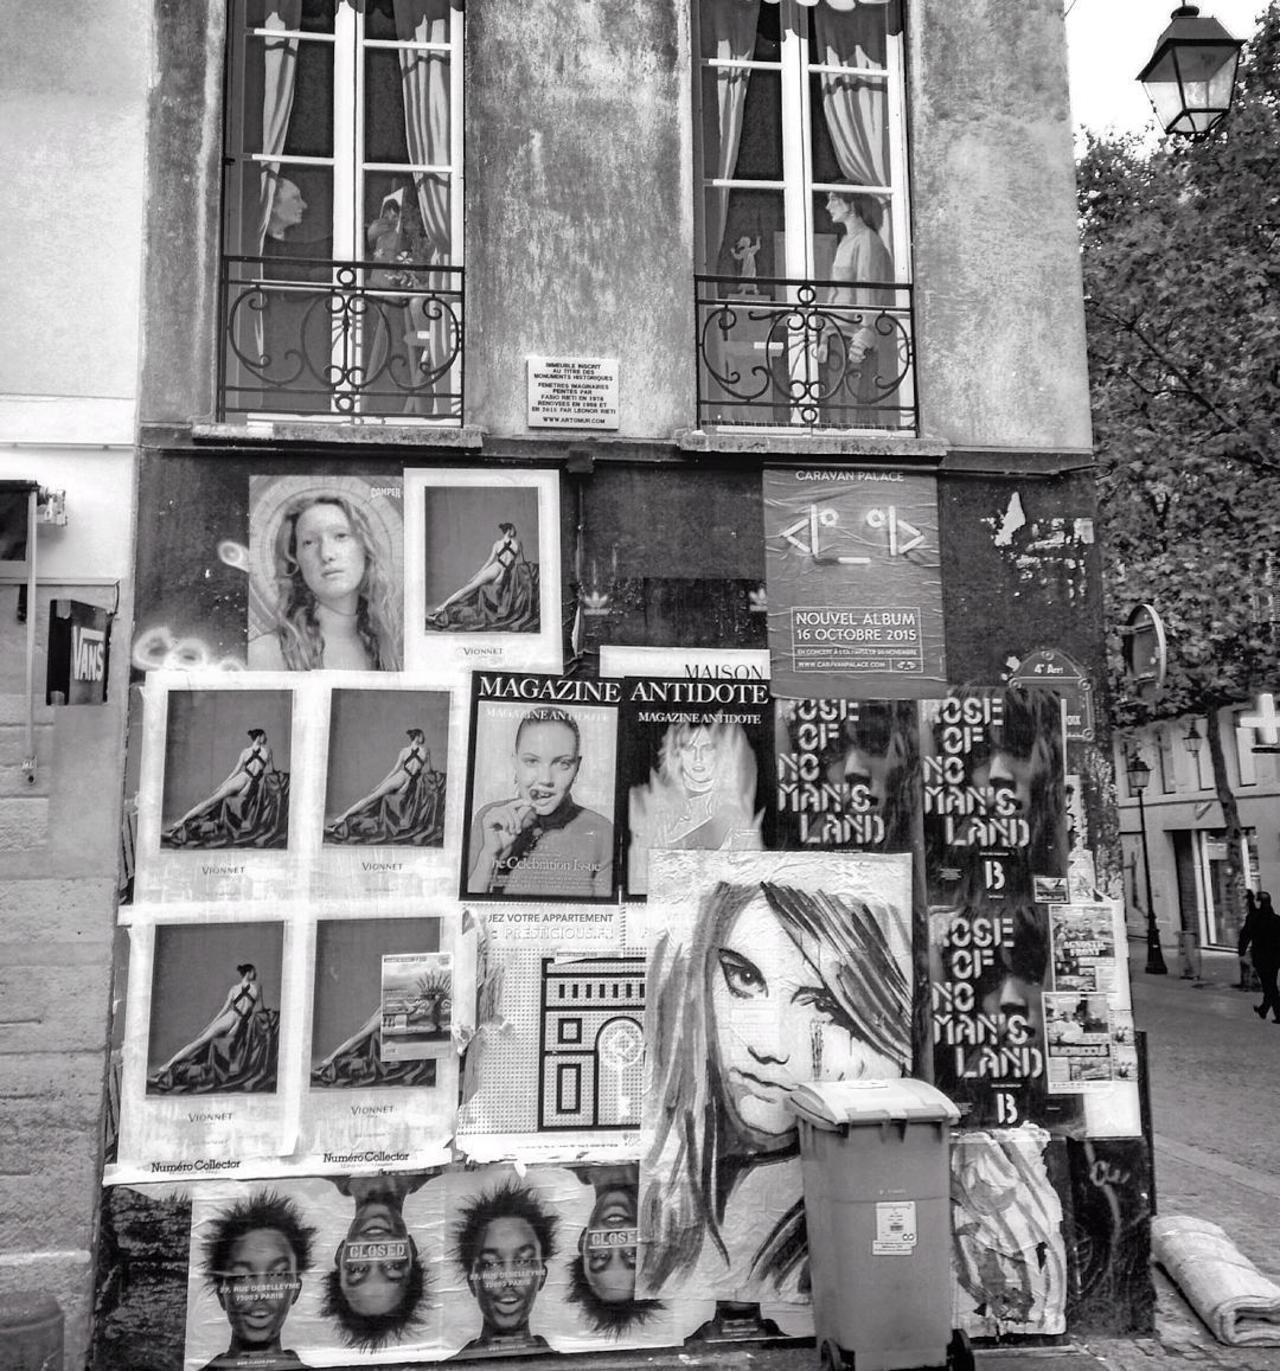 #Paris #graffiti photo by @joecoolpix http://ift.tt/1VNJH8Z #StreetArt http://t.co/1tVwVthNWM